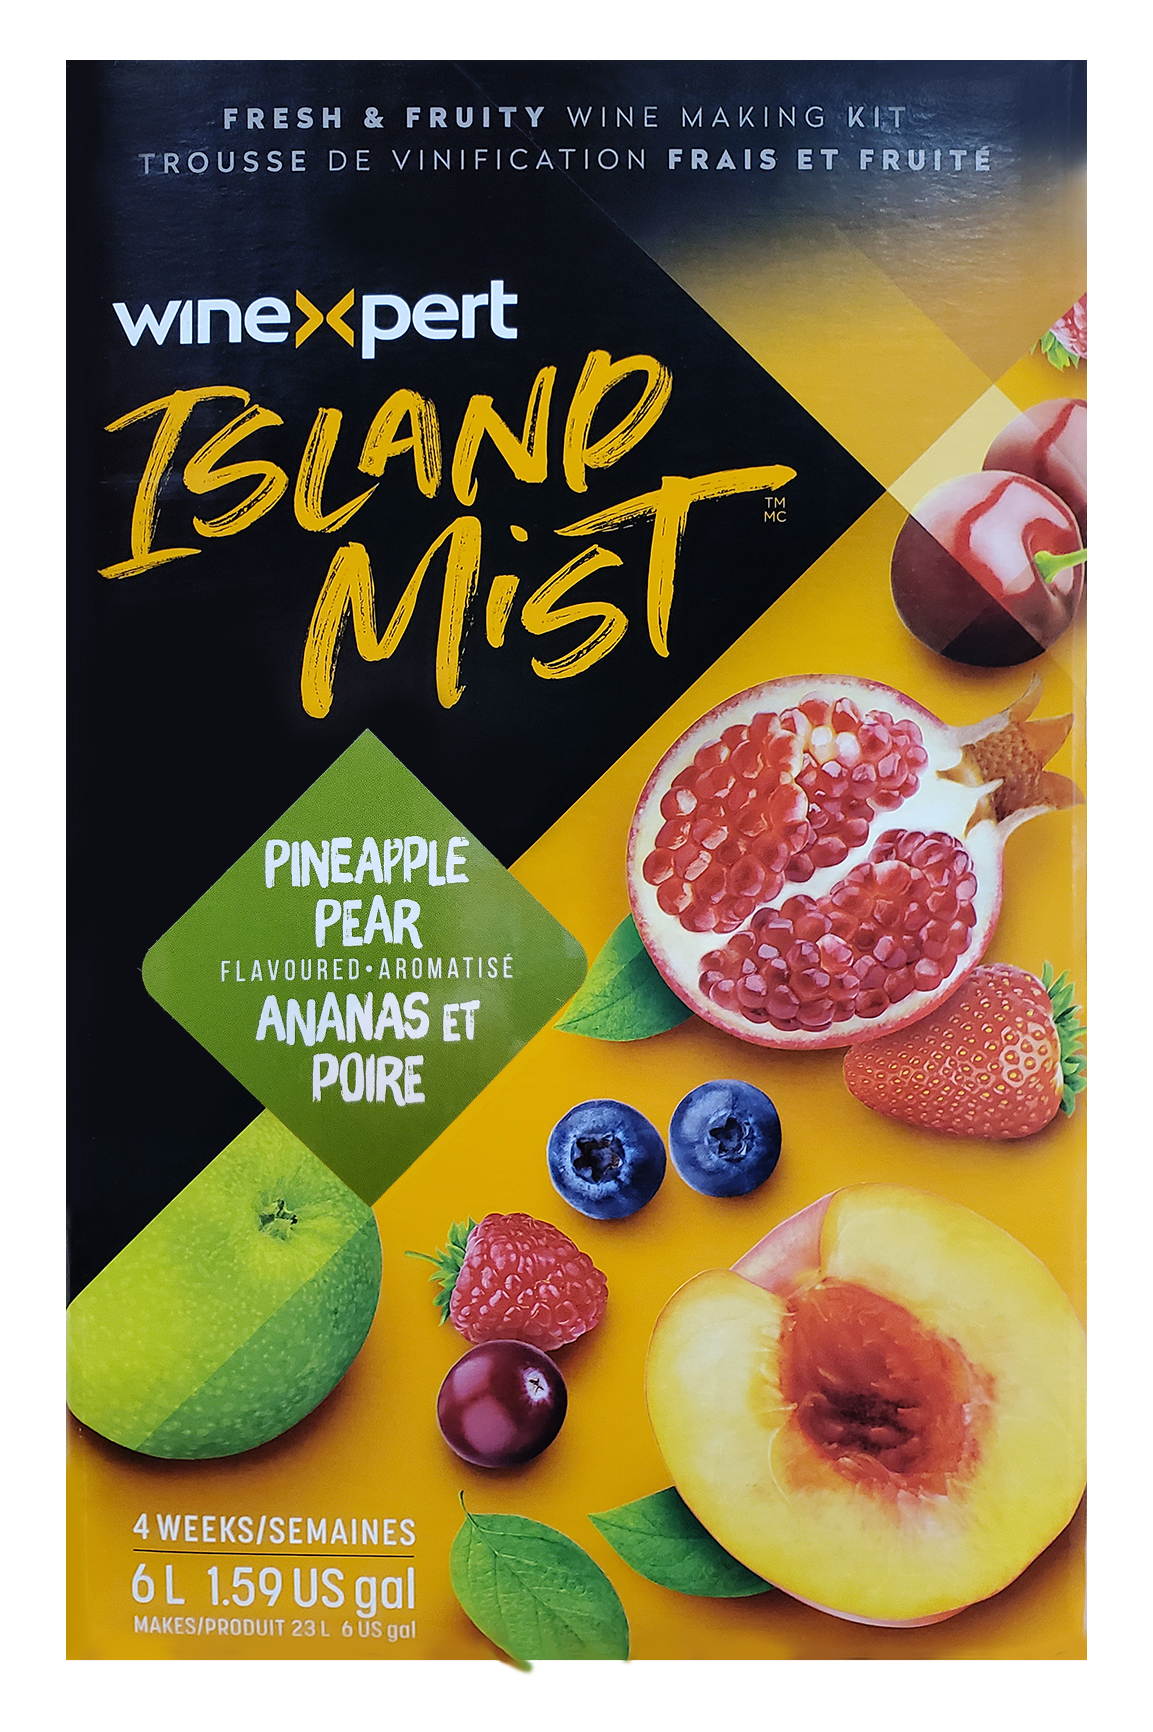 Home Brew Ohio Pineapple Pear Pinot Grigio (Island Mist) Ingredient kit